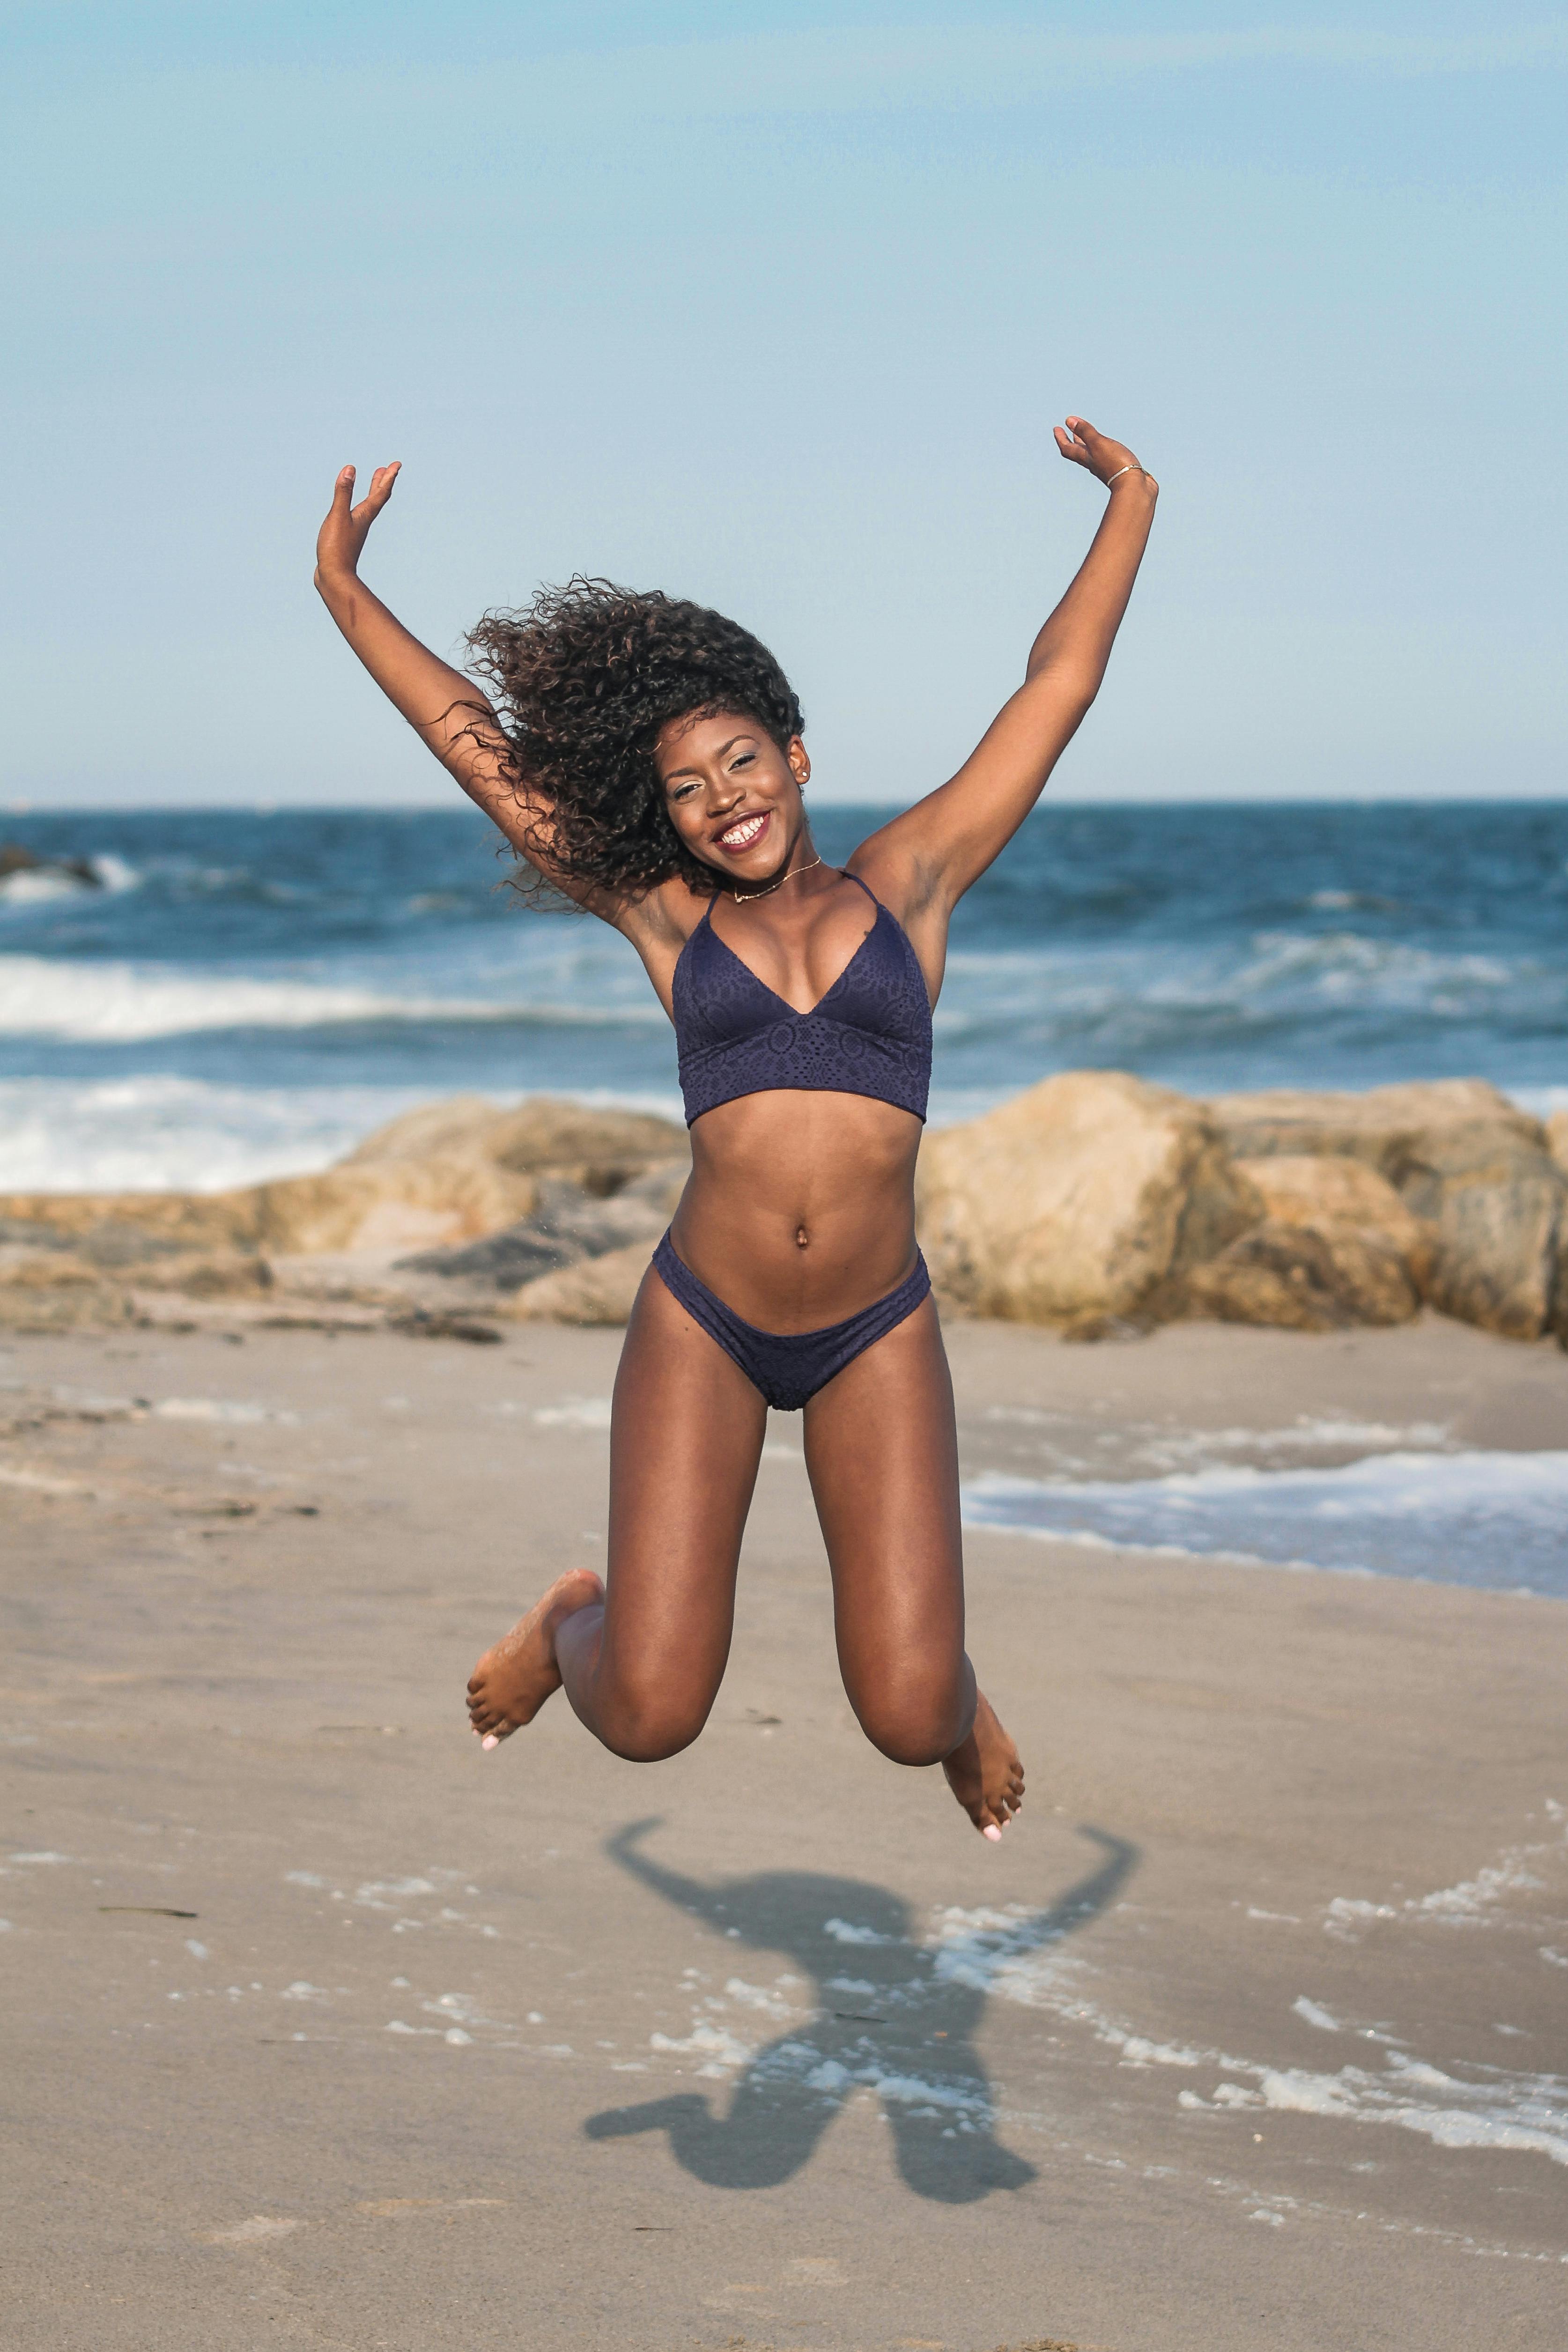 100+ Bikini Model Pictures [HD] | Download Free Images on Unsplash